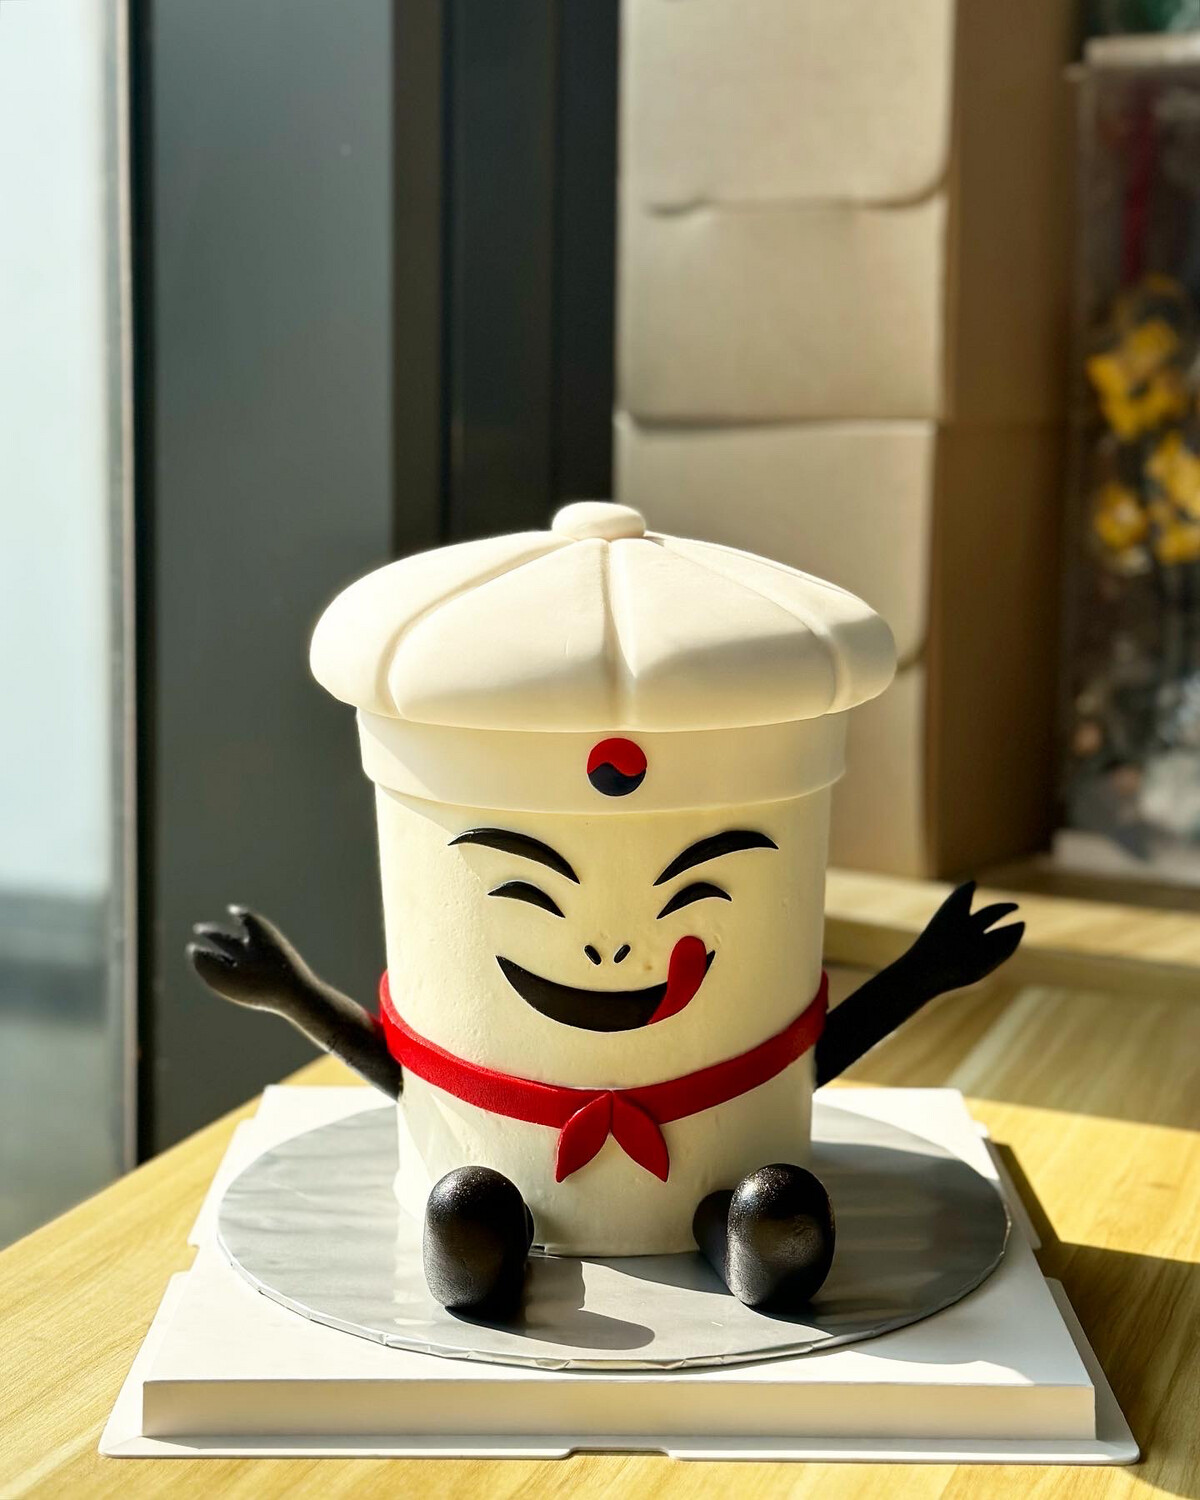 Corporate Cake - 3D Chef Mascot